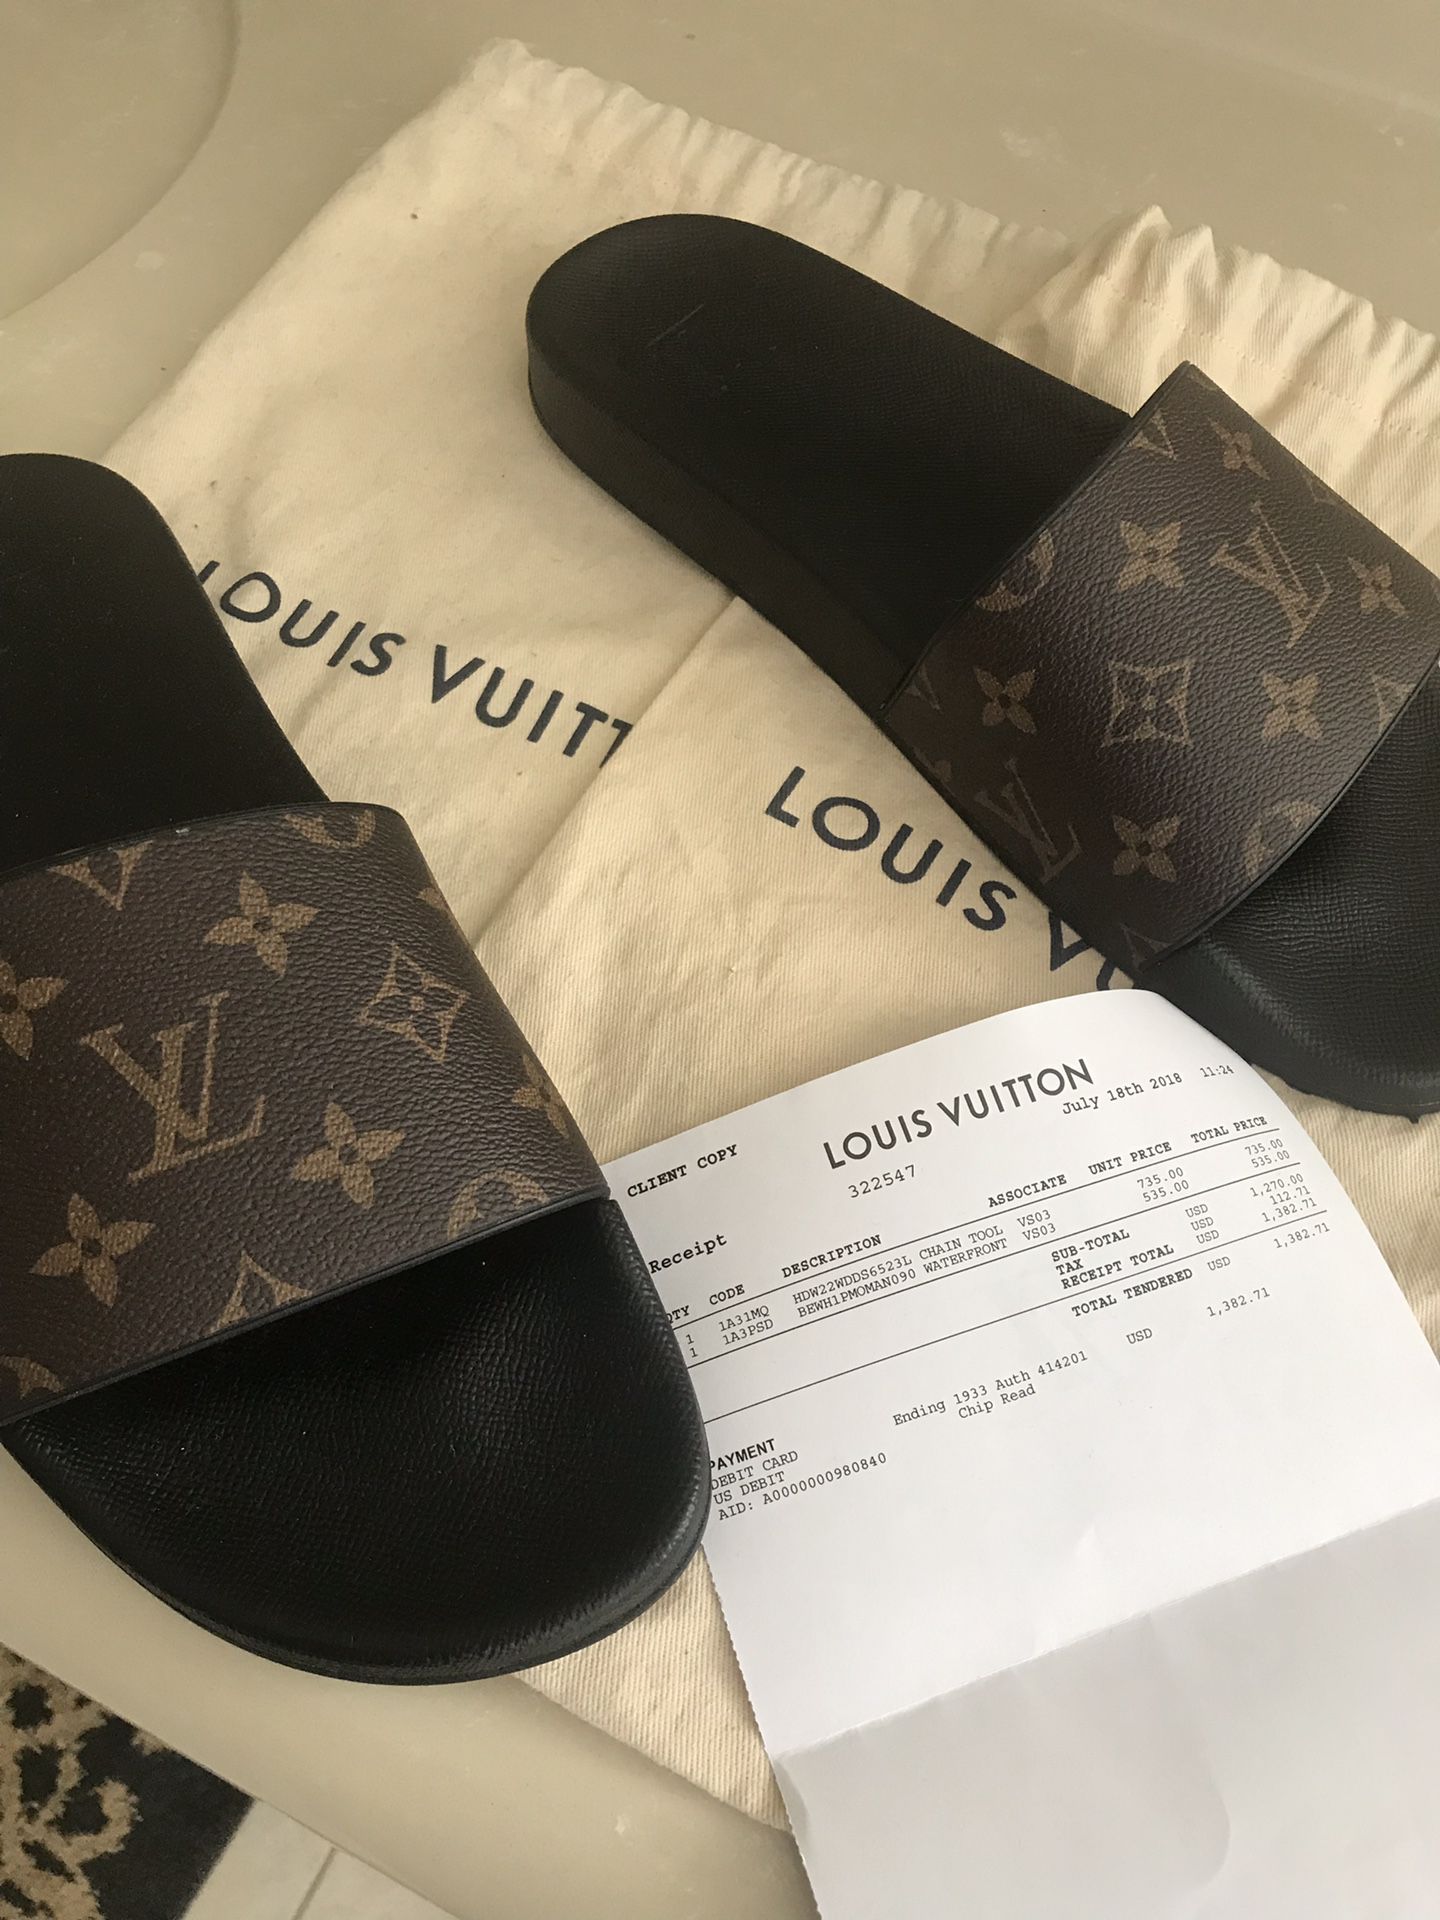 Louis Vuitton Fur Slippers (women) for Sale in Miami, FL - OfferUp